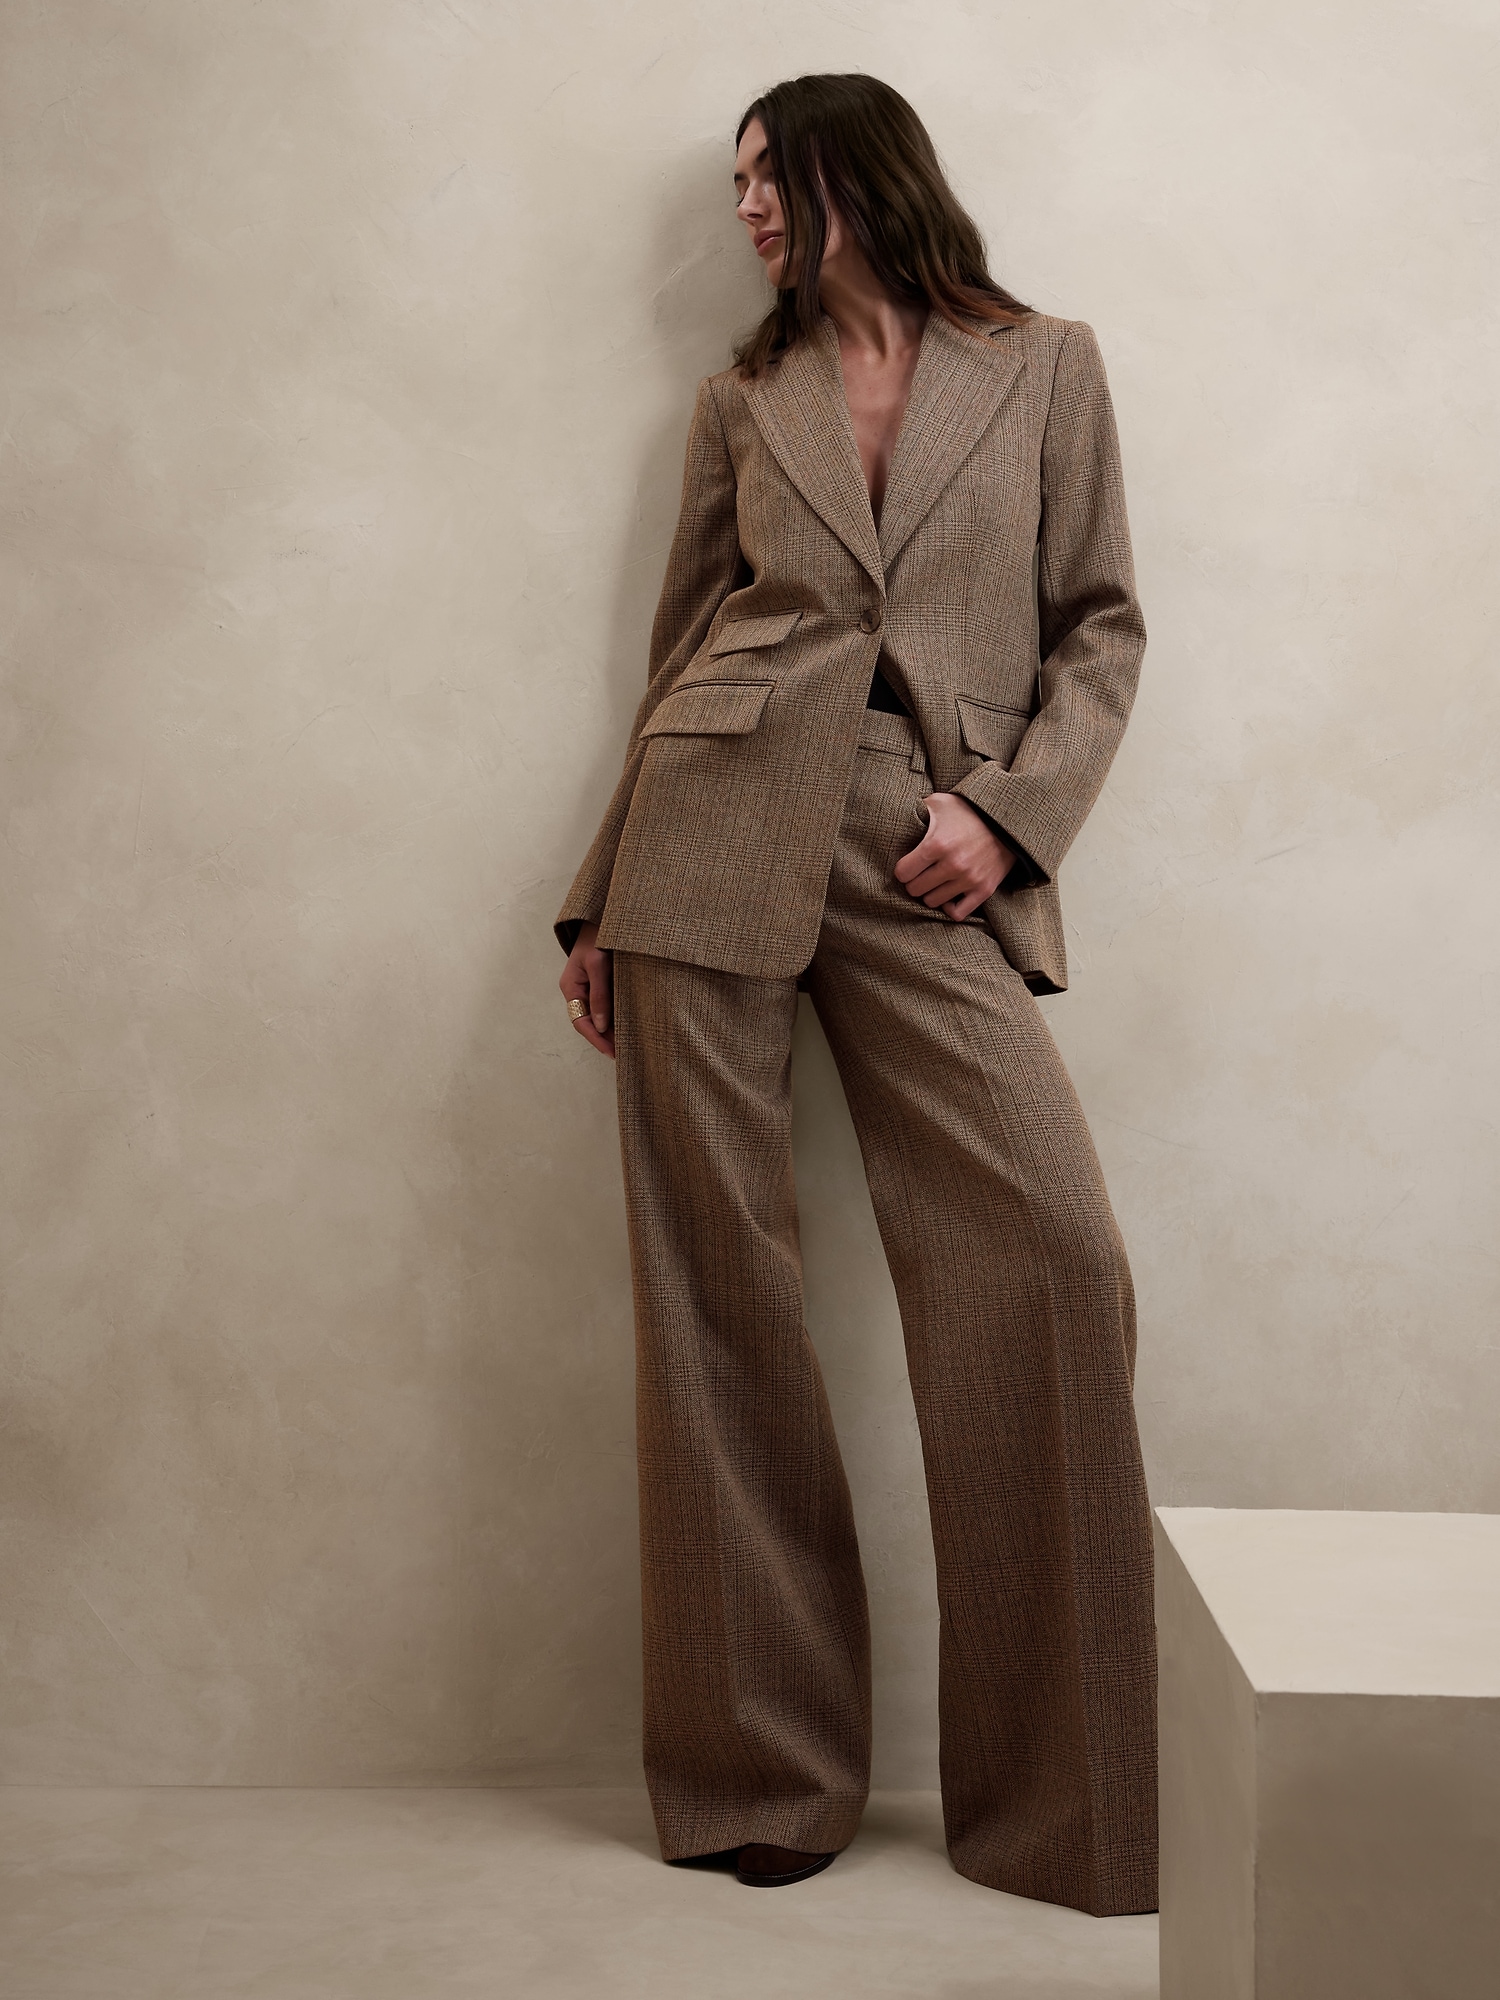 Women's Suits & Suits Sets Online - Sumissura